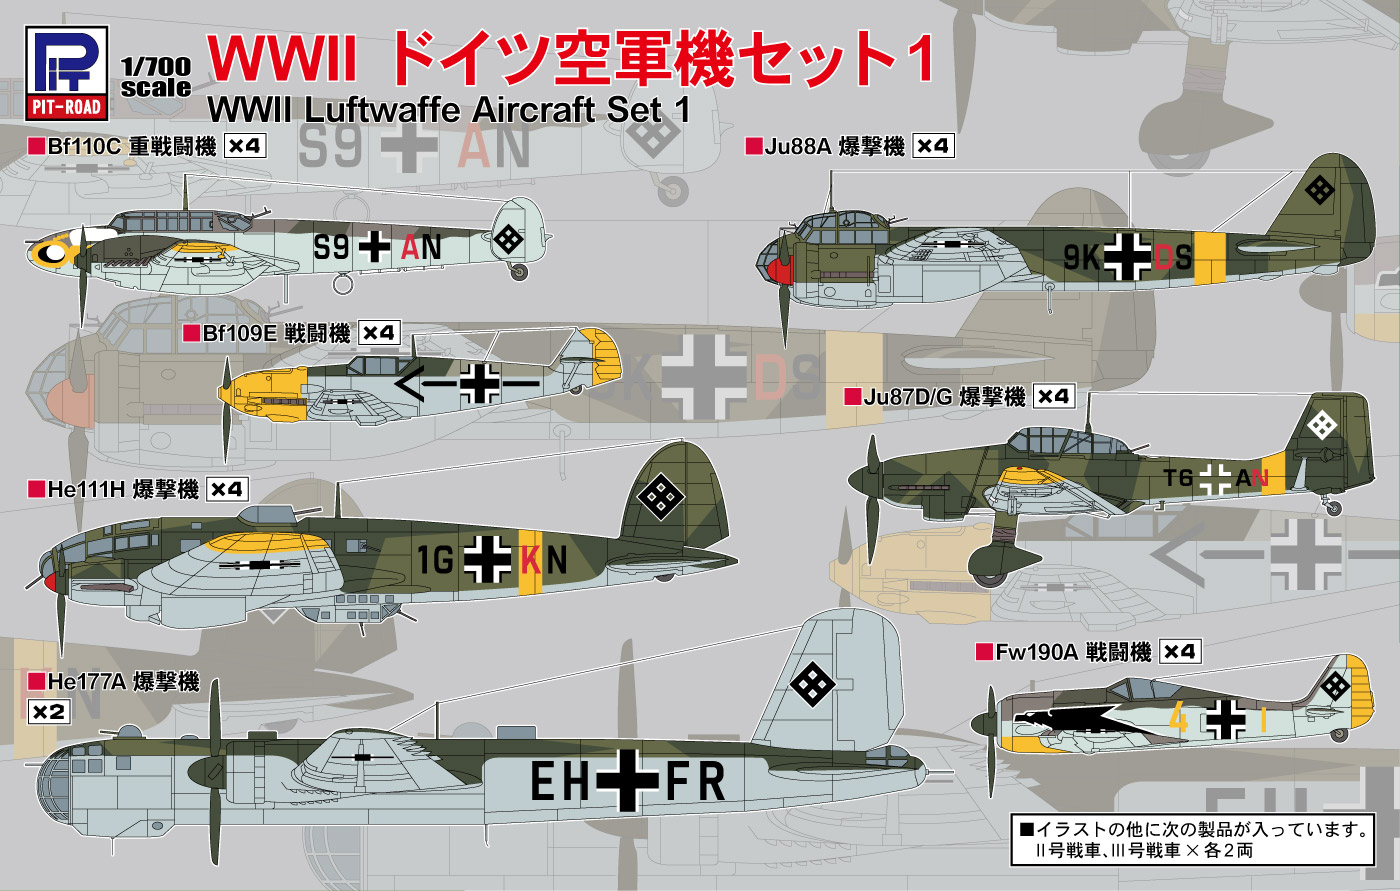 1/700 WWII ドイツ空軍機セット1 - ウインドウを閉じる